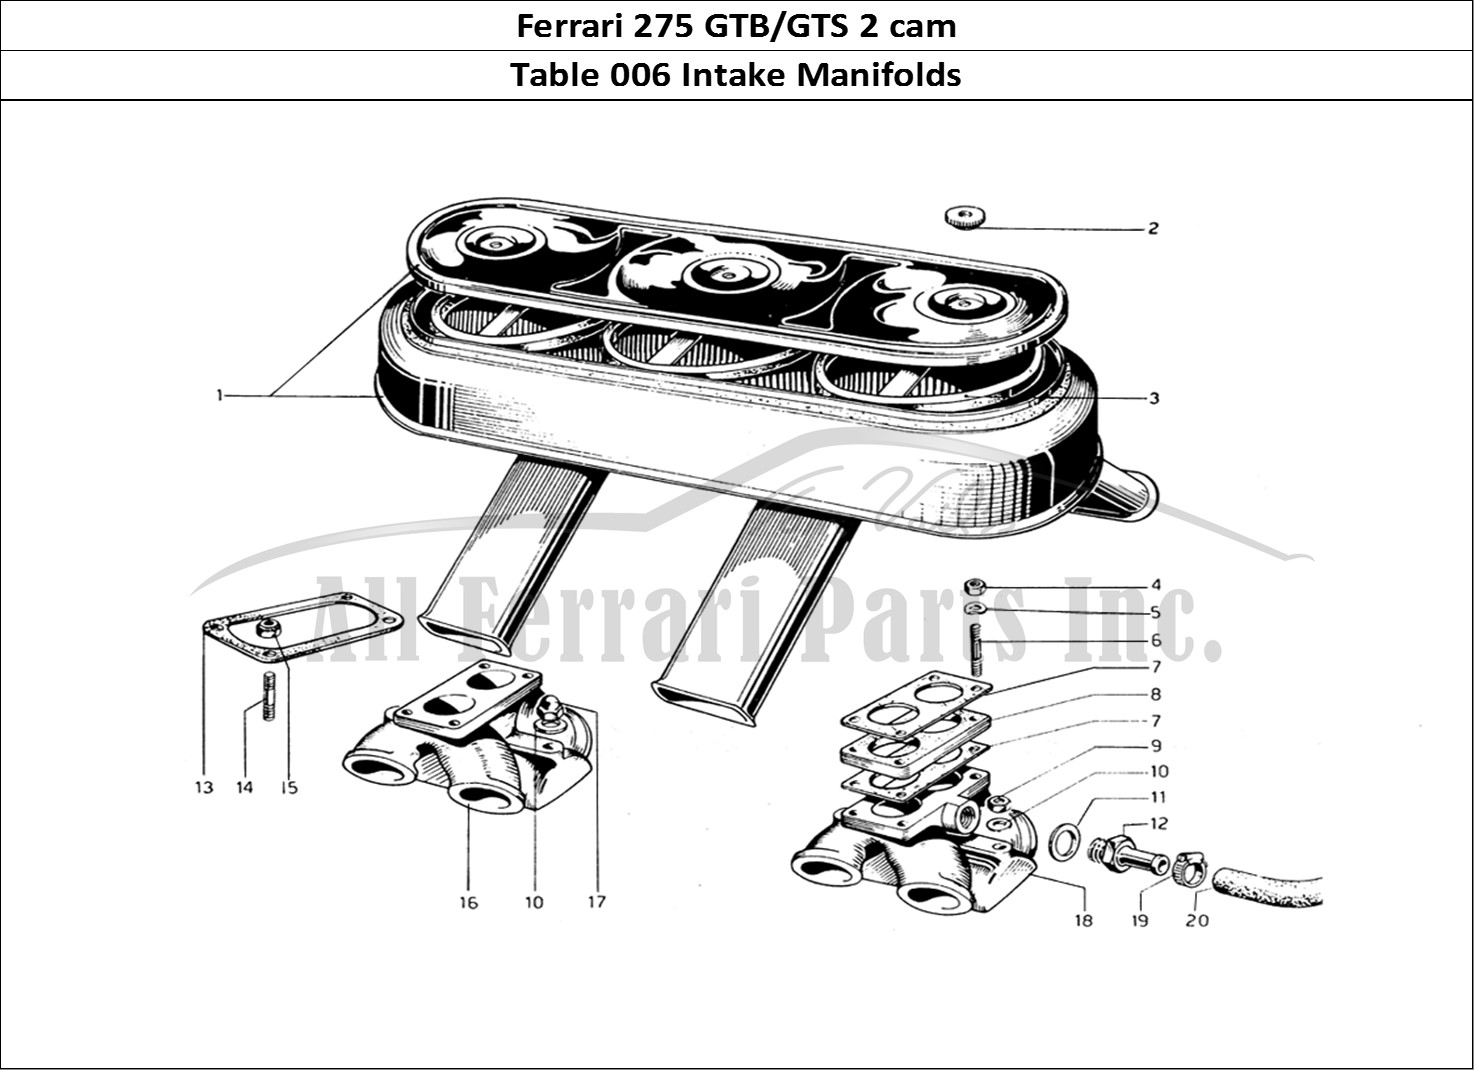 Ferrari Parts Ferrari 275 GTB/GTS 2 cam Page 006 Inlet Manifolds